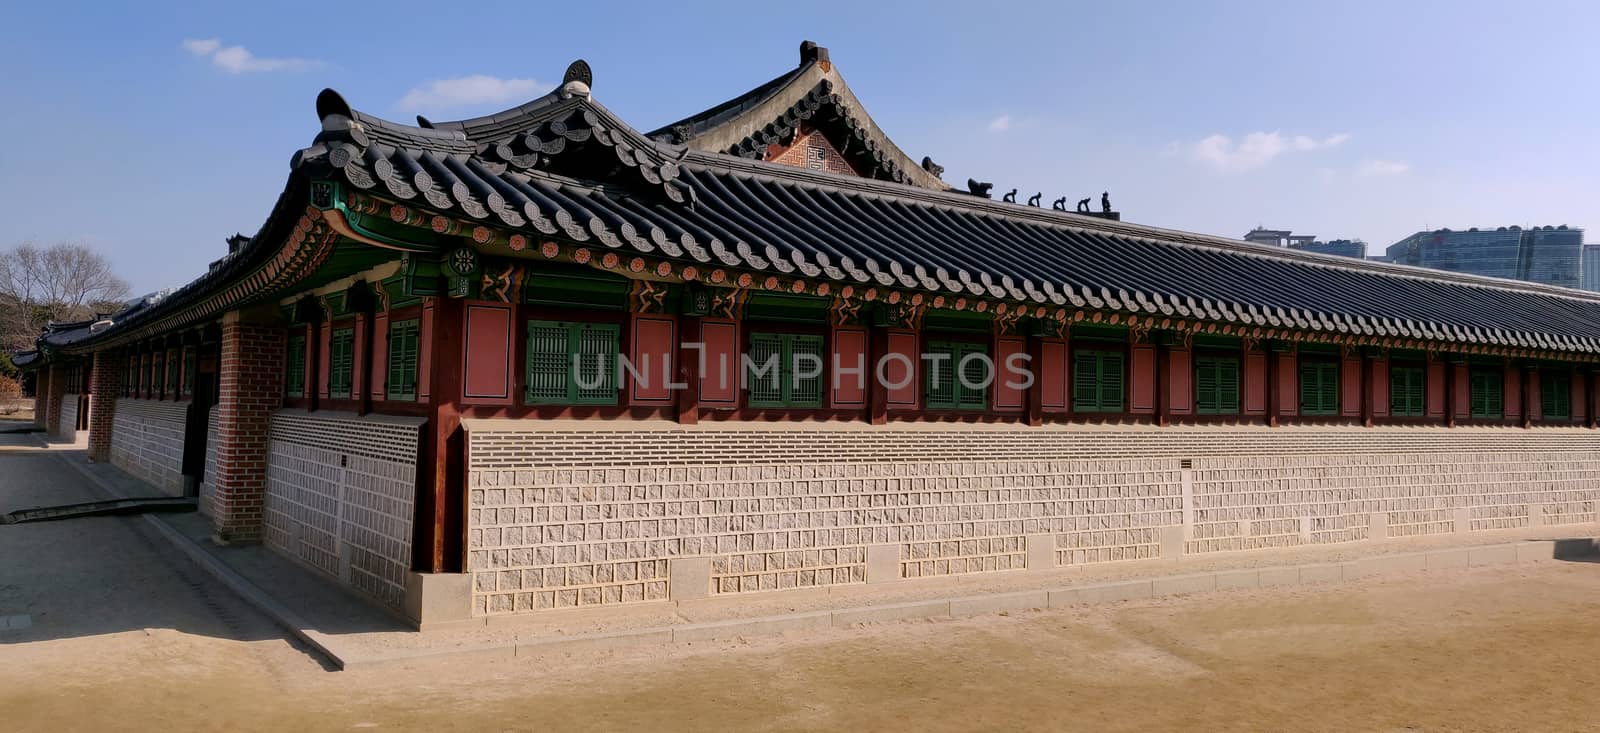 A structure inside the ancient Gyeongbokgung Palace, Seoul, Korea by mshivangi92